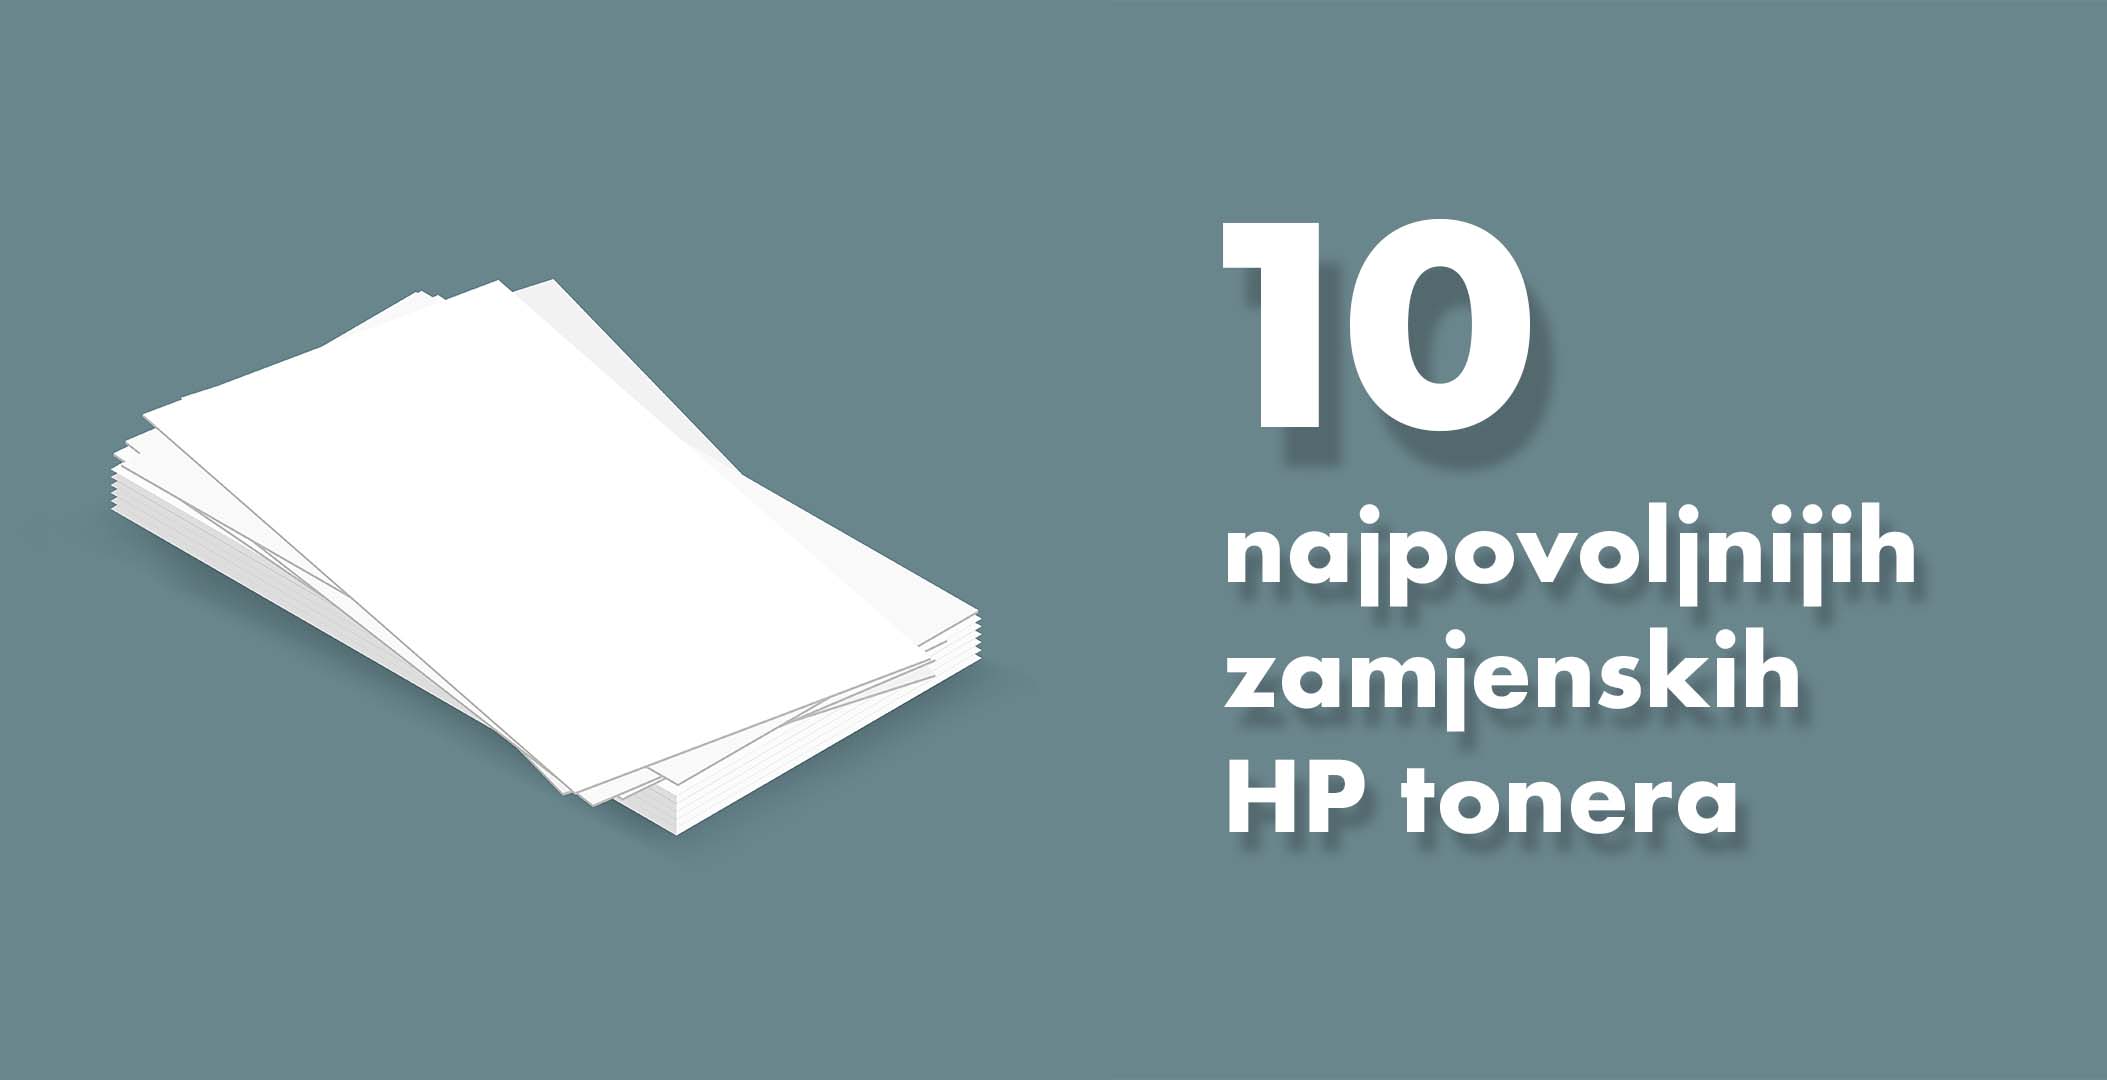 10 najpovoljnijih zamjenskih HP tonera